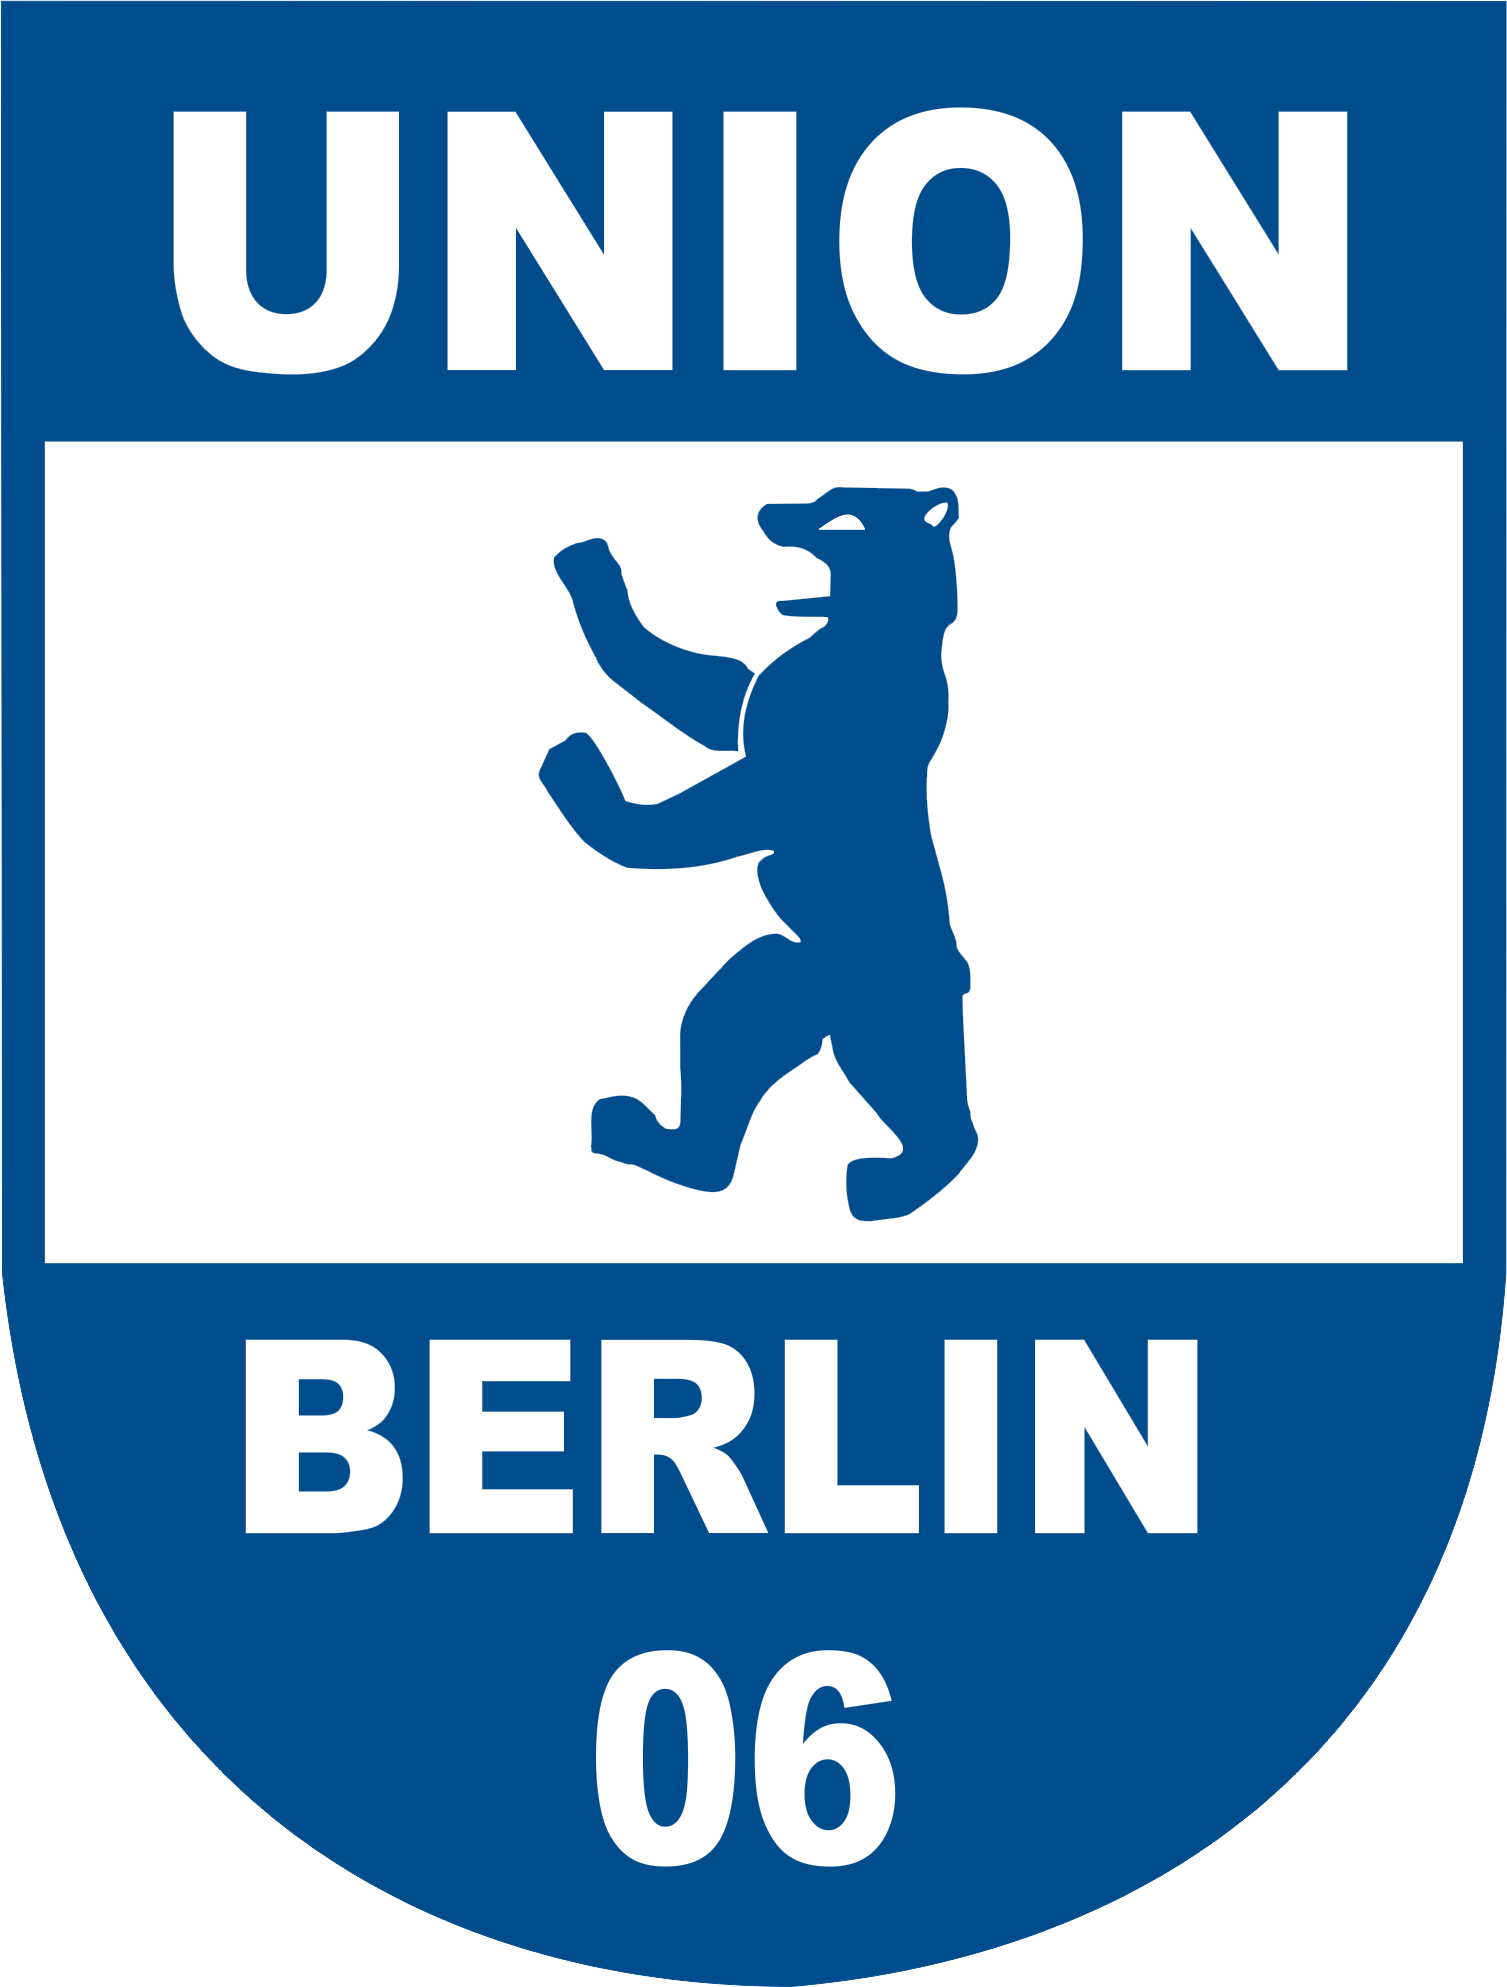 SC Union 06 Logo